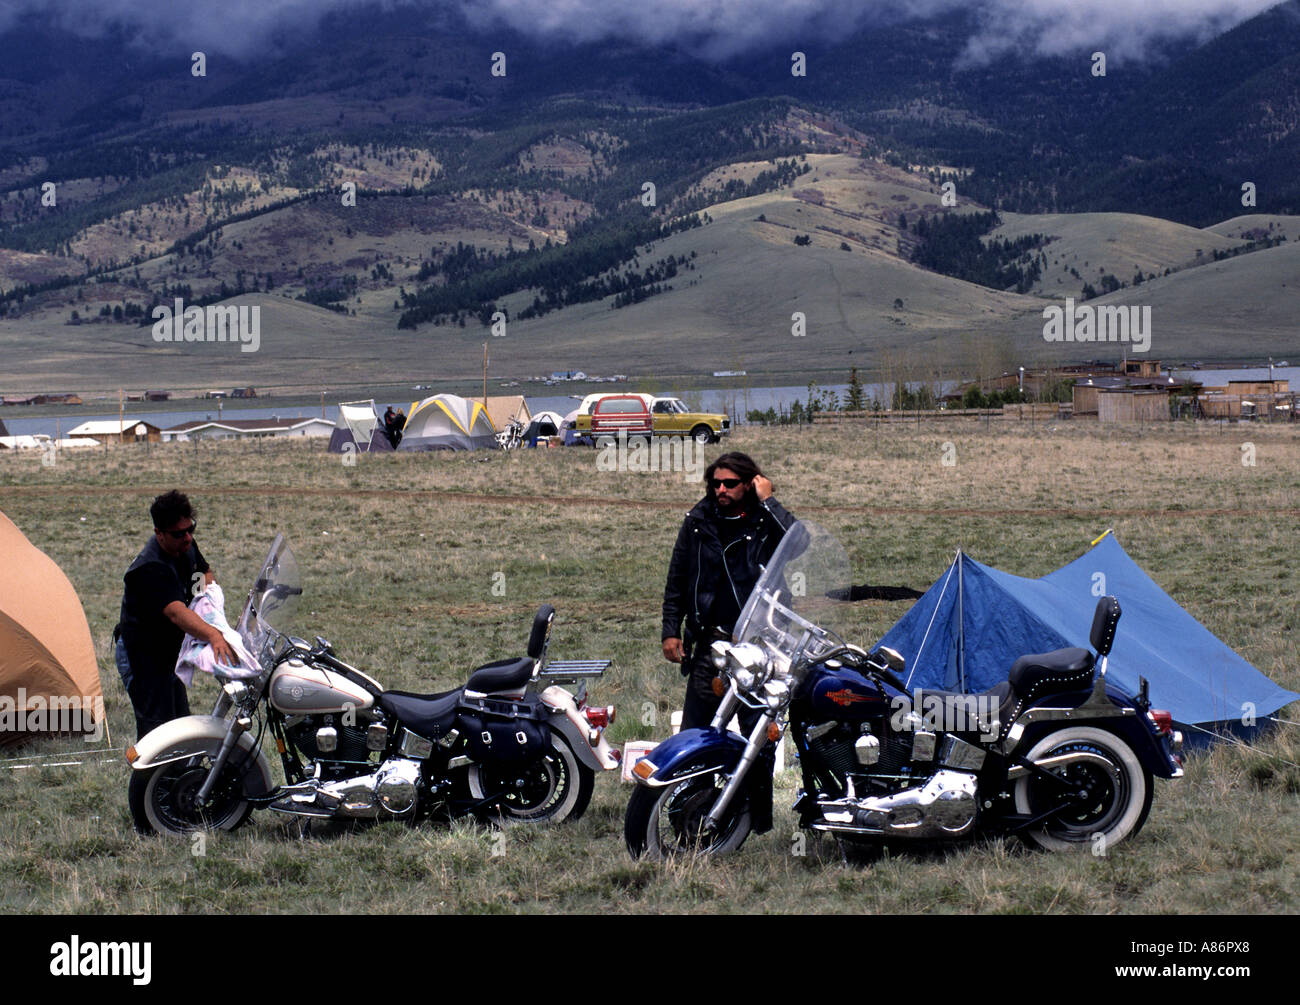 harley davidson motorcycle tent